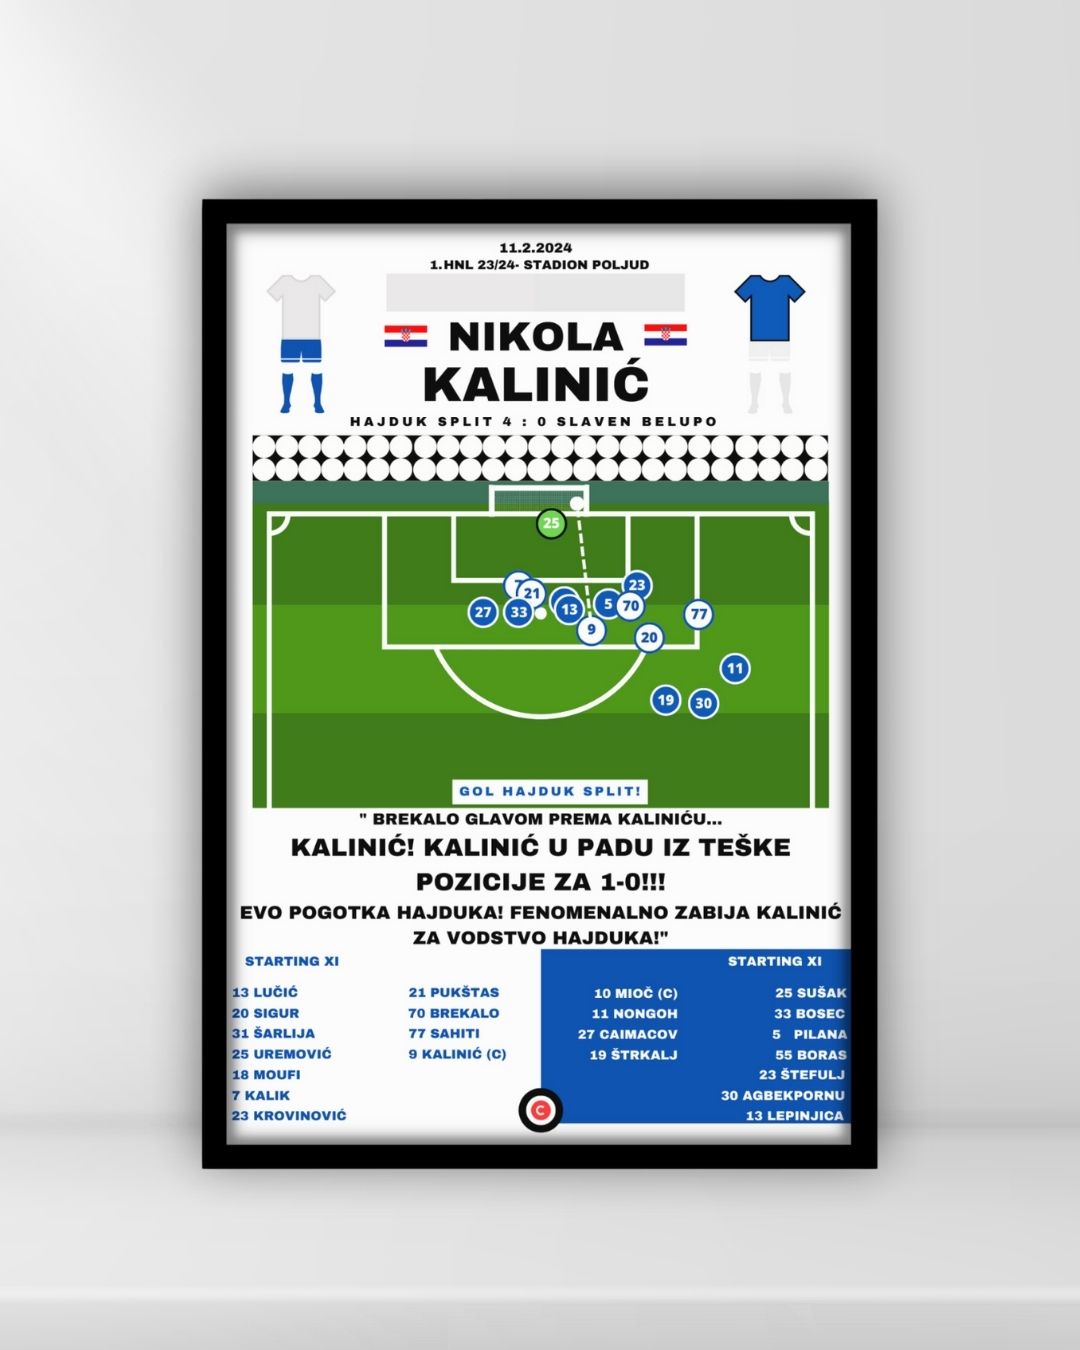 Nikola Kalinić vs Slaven Belupo- 1.HNL 23/24- HNK Hajduk Split - Premium  from CatenaccioDesigns - Just €14.50! Shop now at CatenaccioDesigns